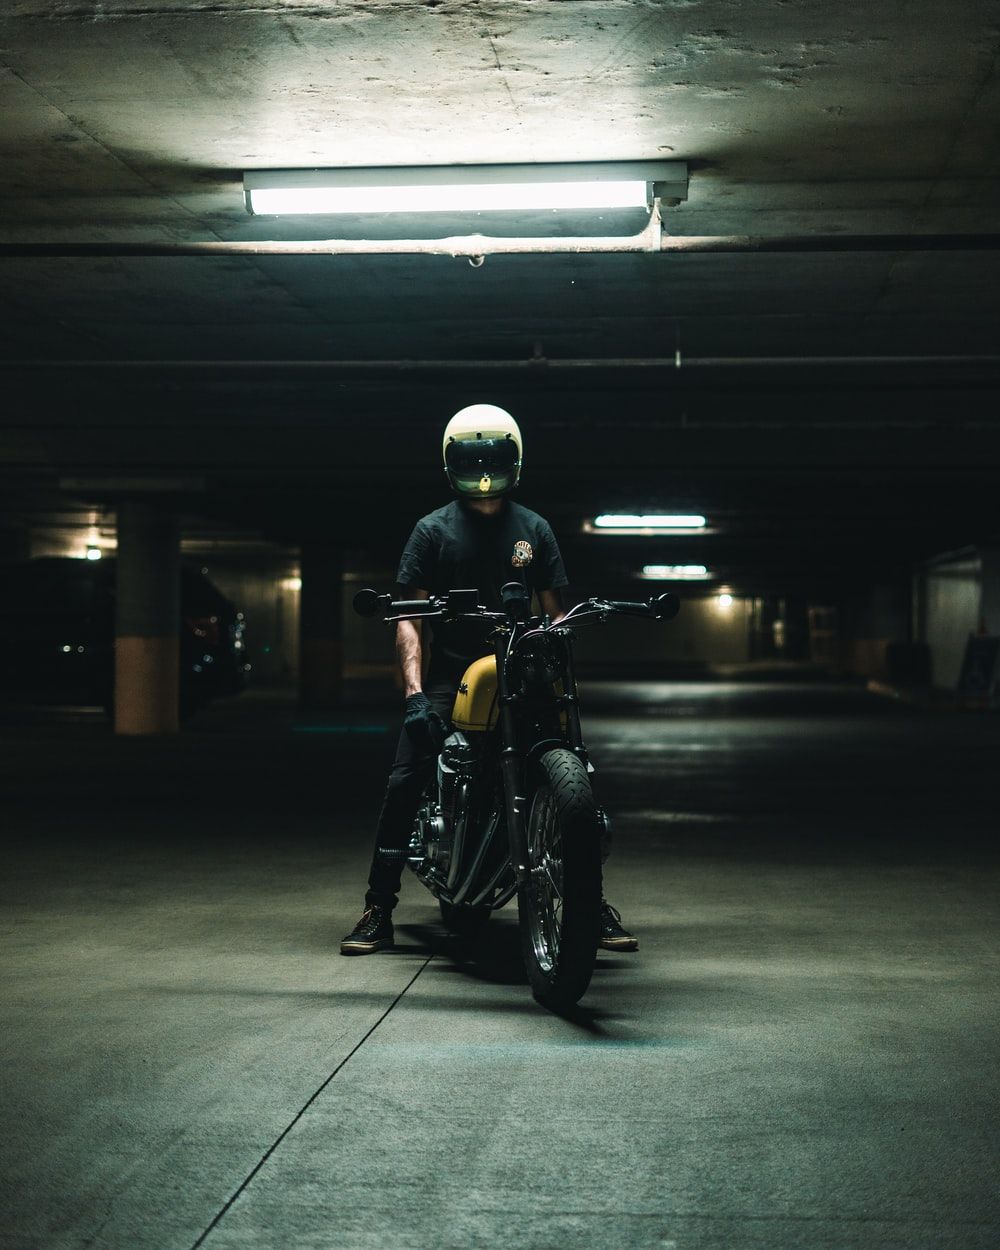 Motorcycle Garage Picture. Download Free Image